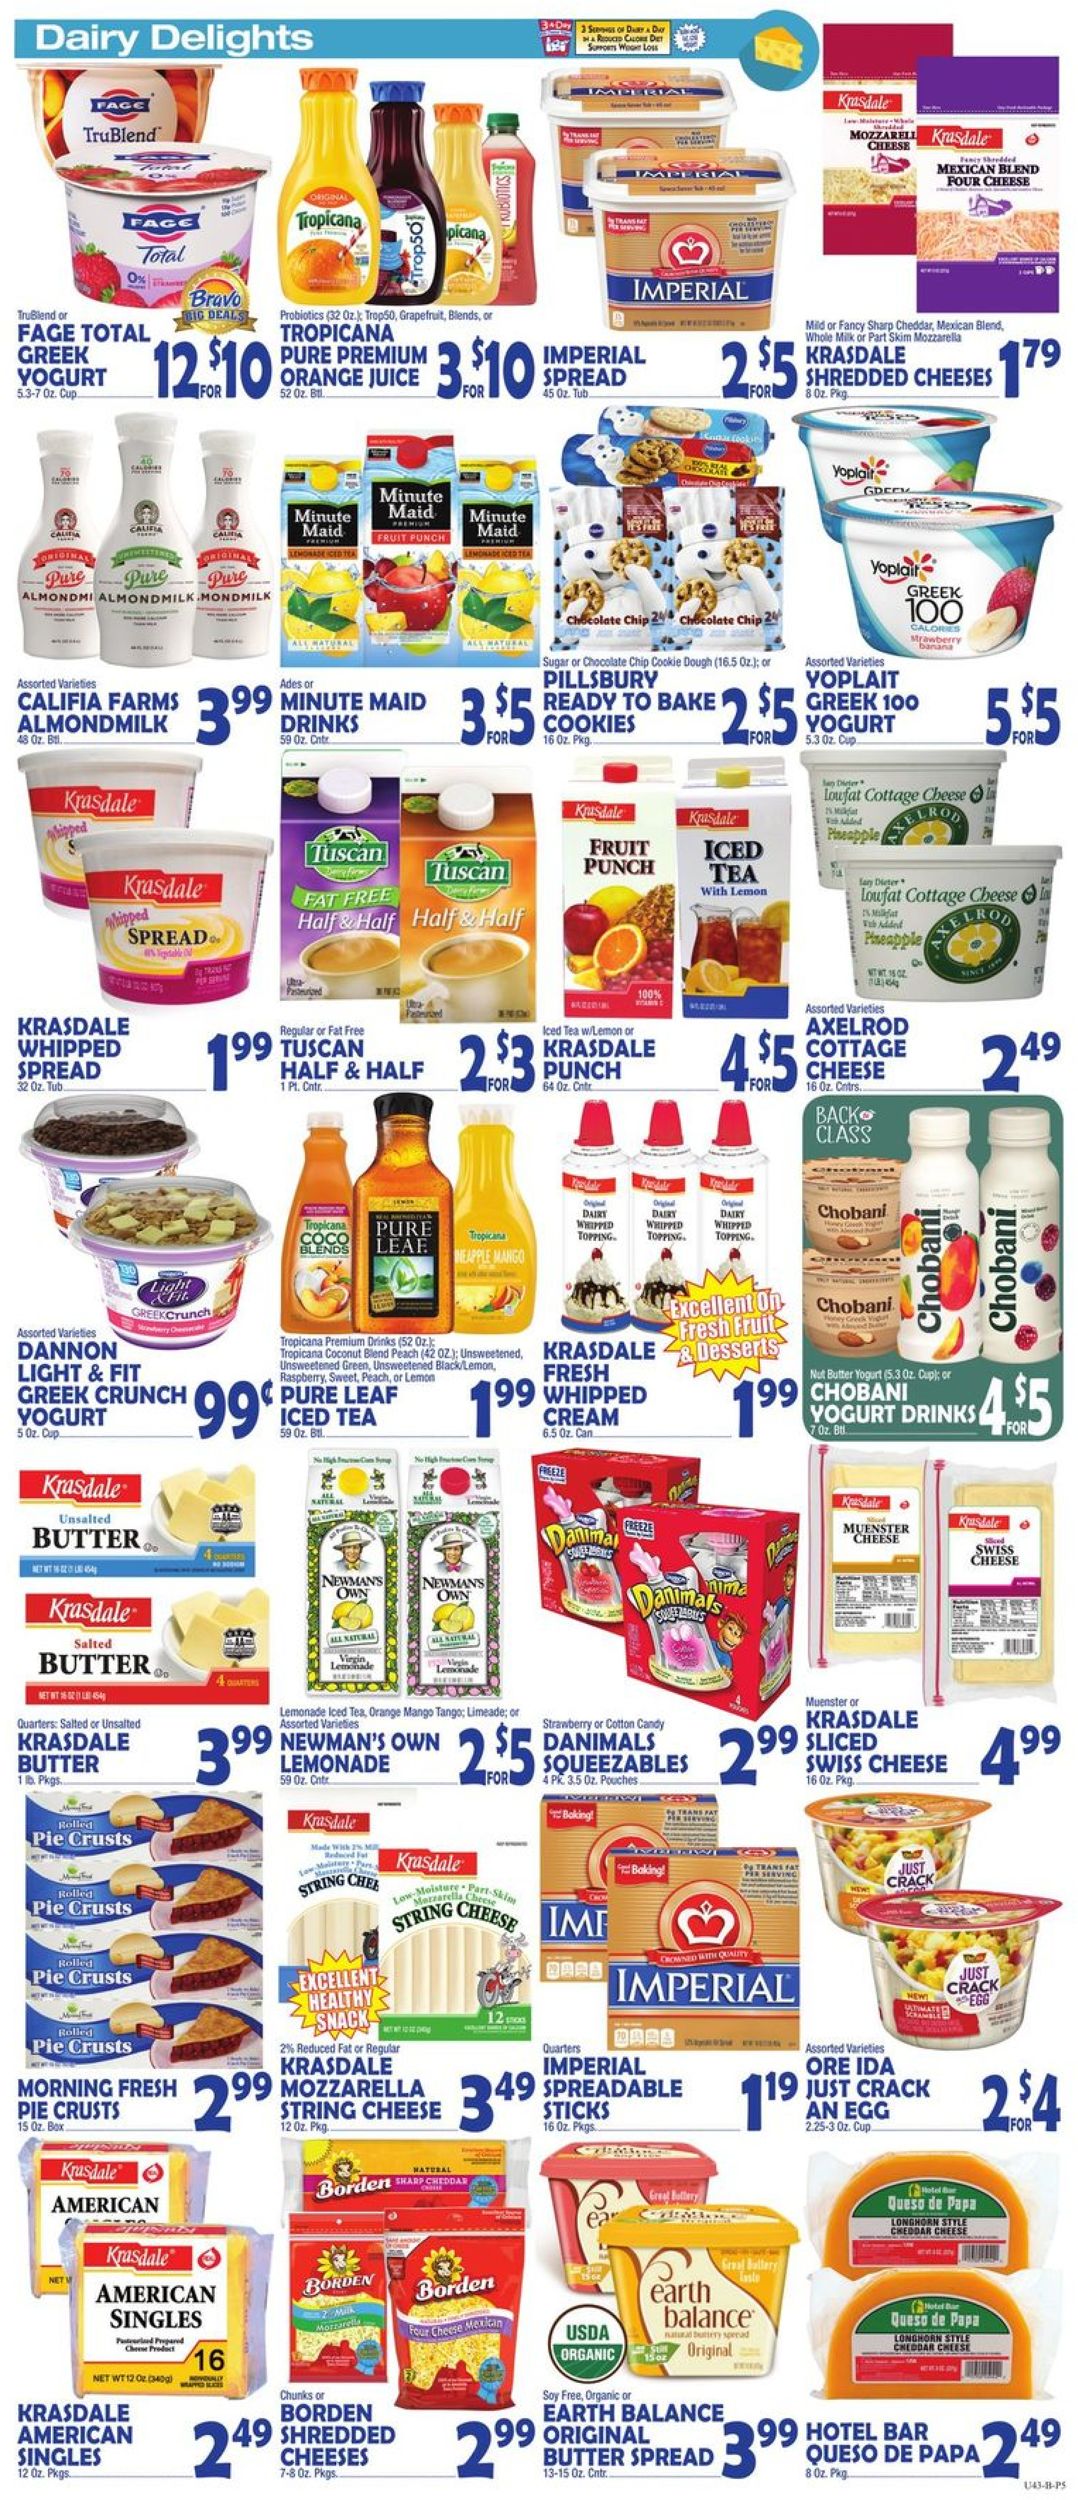 Catalogue Bravo Supermarkets from 08/23/2019